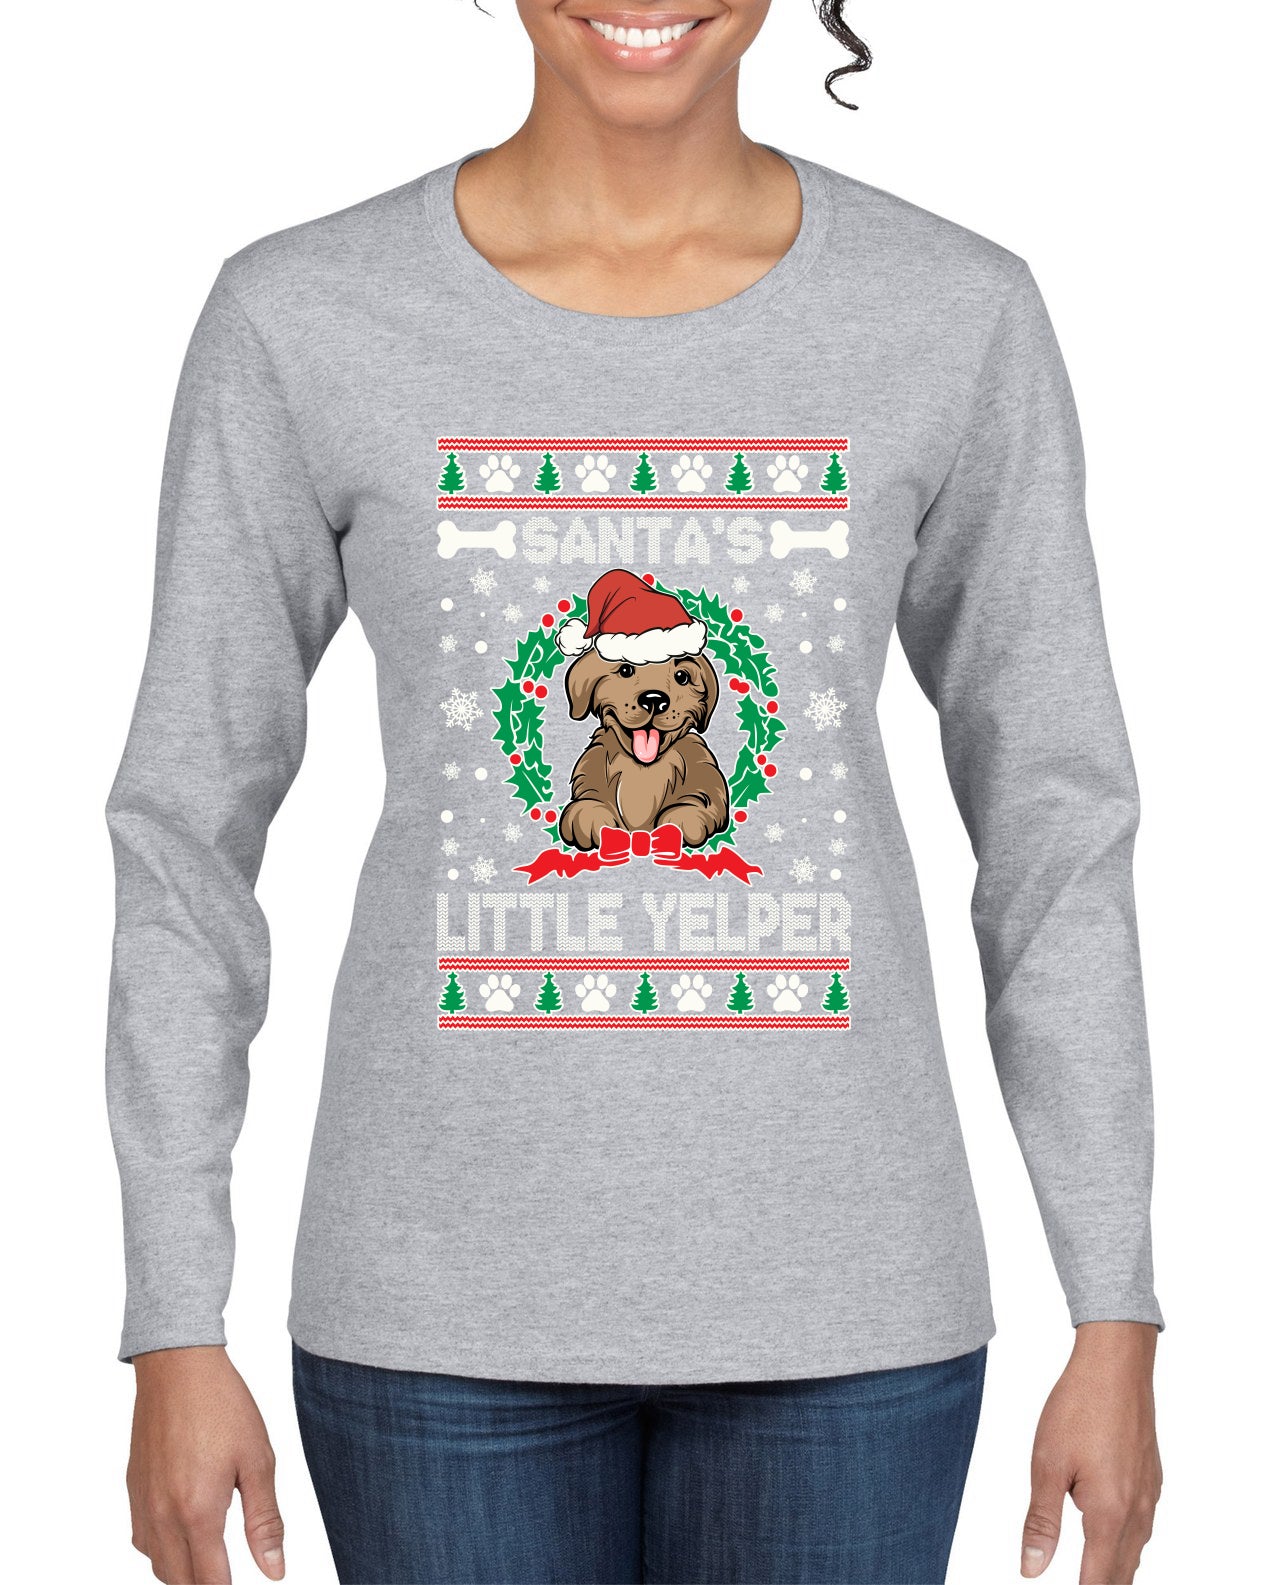 Santa's Little Yelper Christmas Womens Graphic Long Sleeve T-Shirt